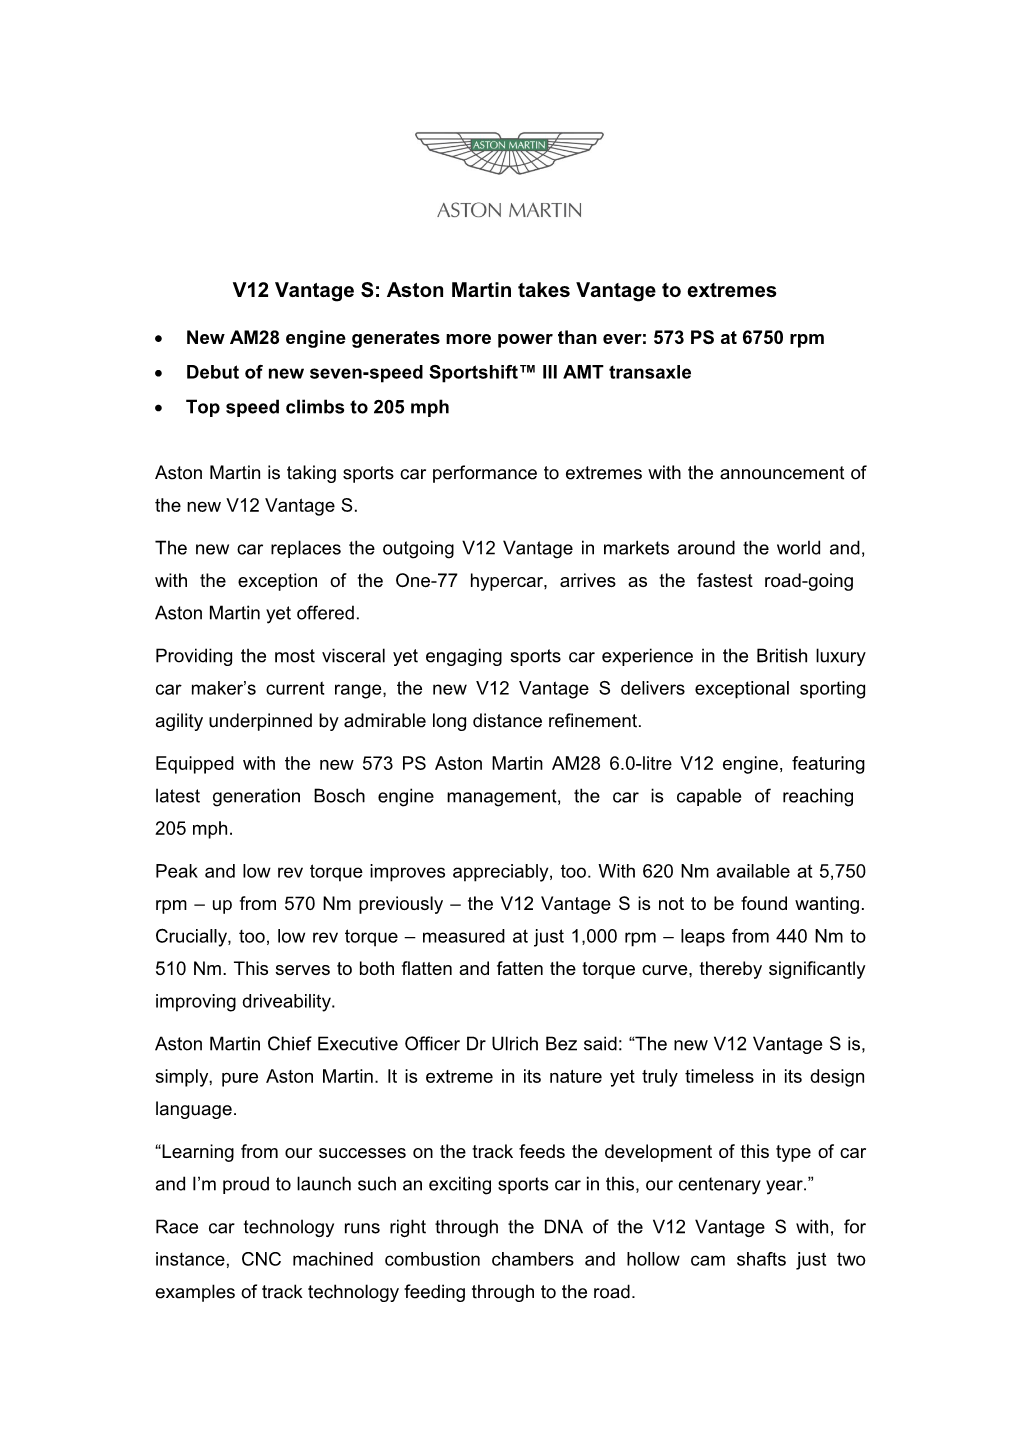 V12 Vantage S: Aston Martin Takes Vantage to Extremes